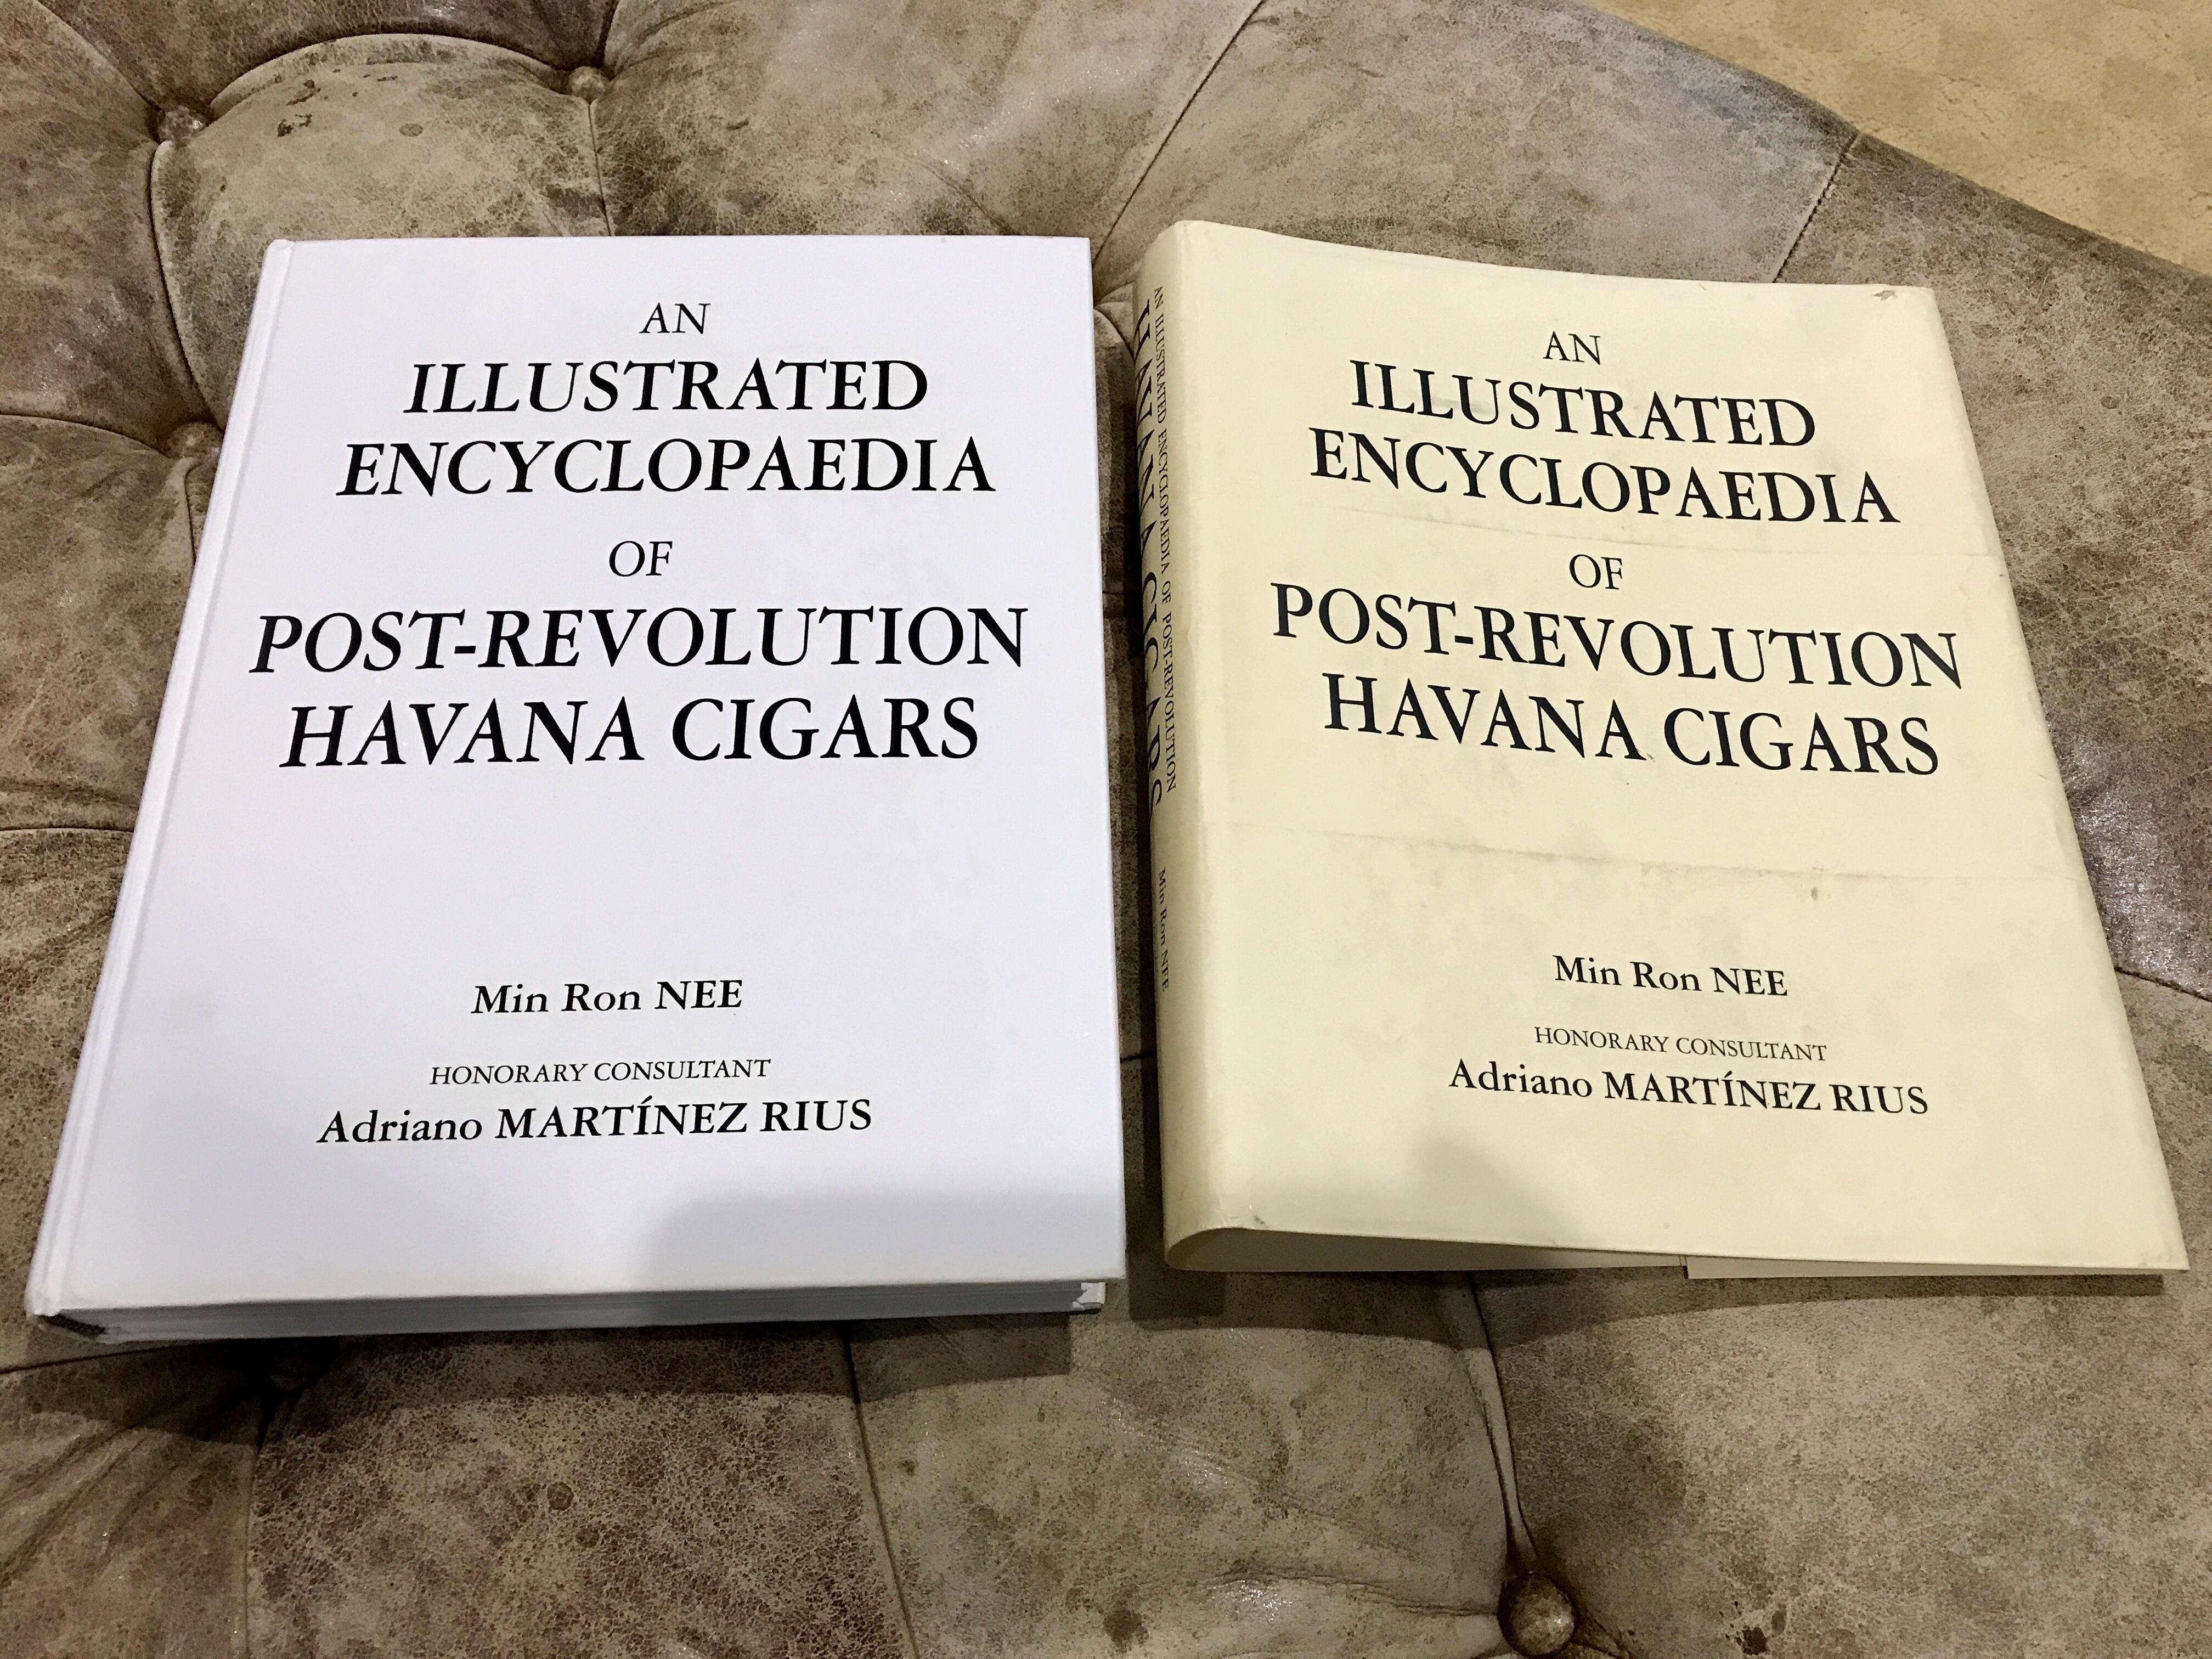 An Illustrated Encyclopedia of Post-Revolution Havana Cigars by